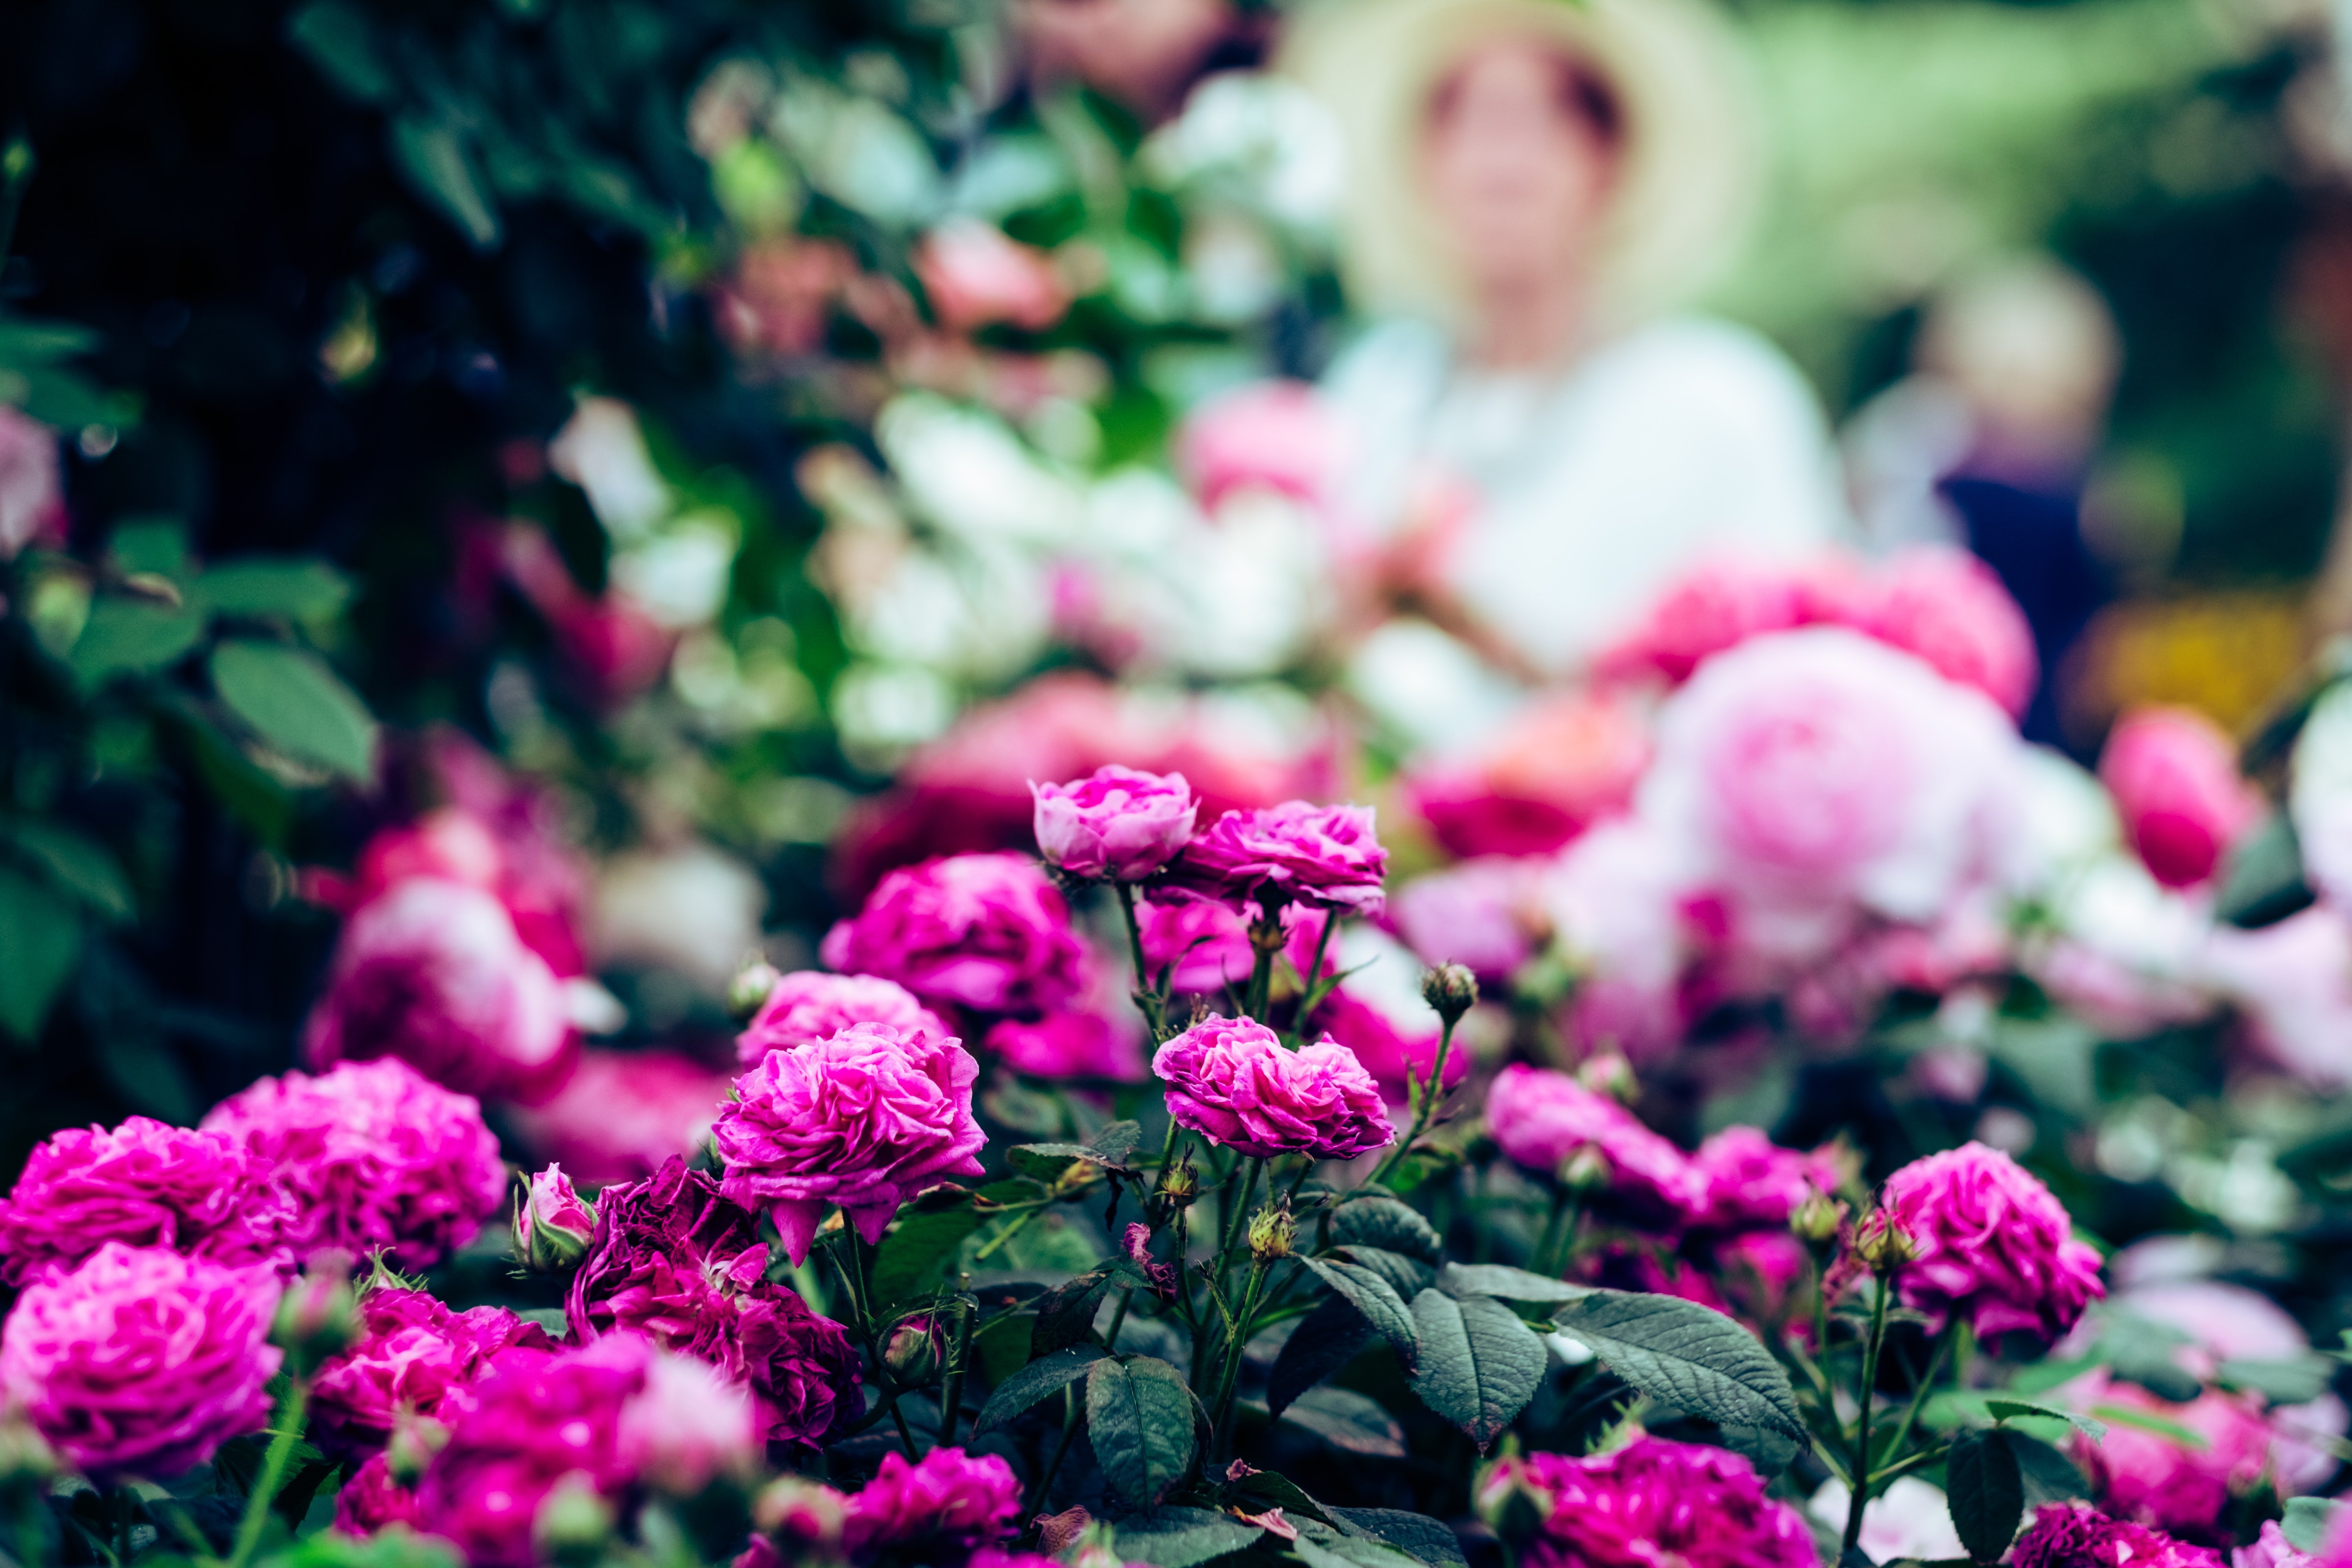 Agatha was thrilled when her rare rose plants arrived. | Source: Unsplash